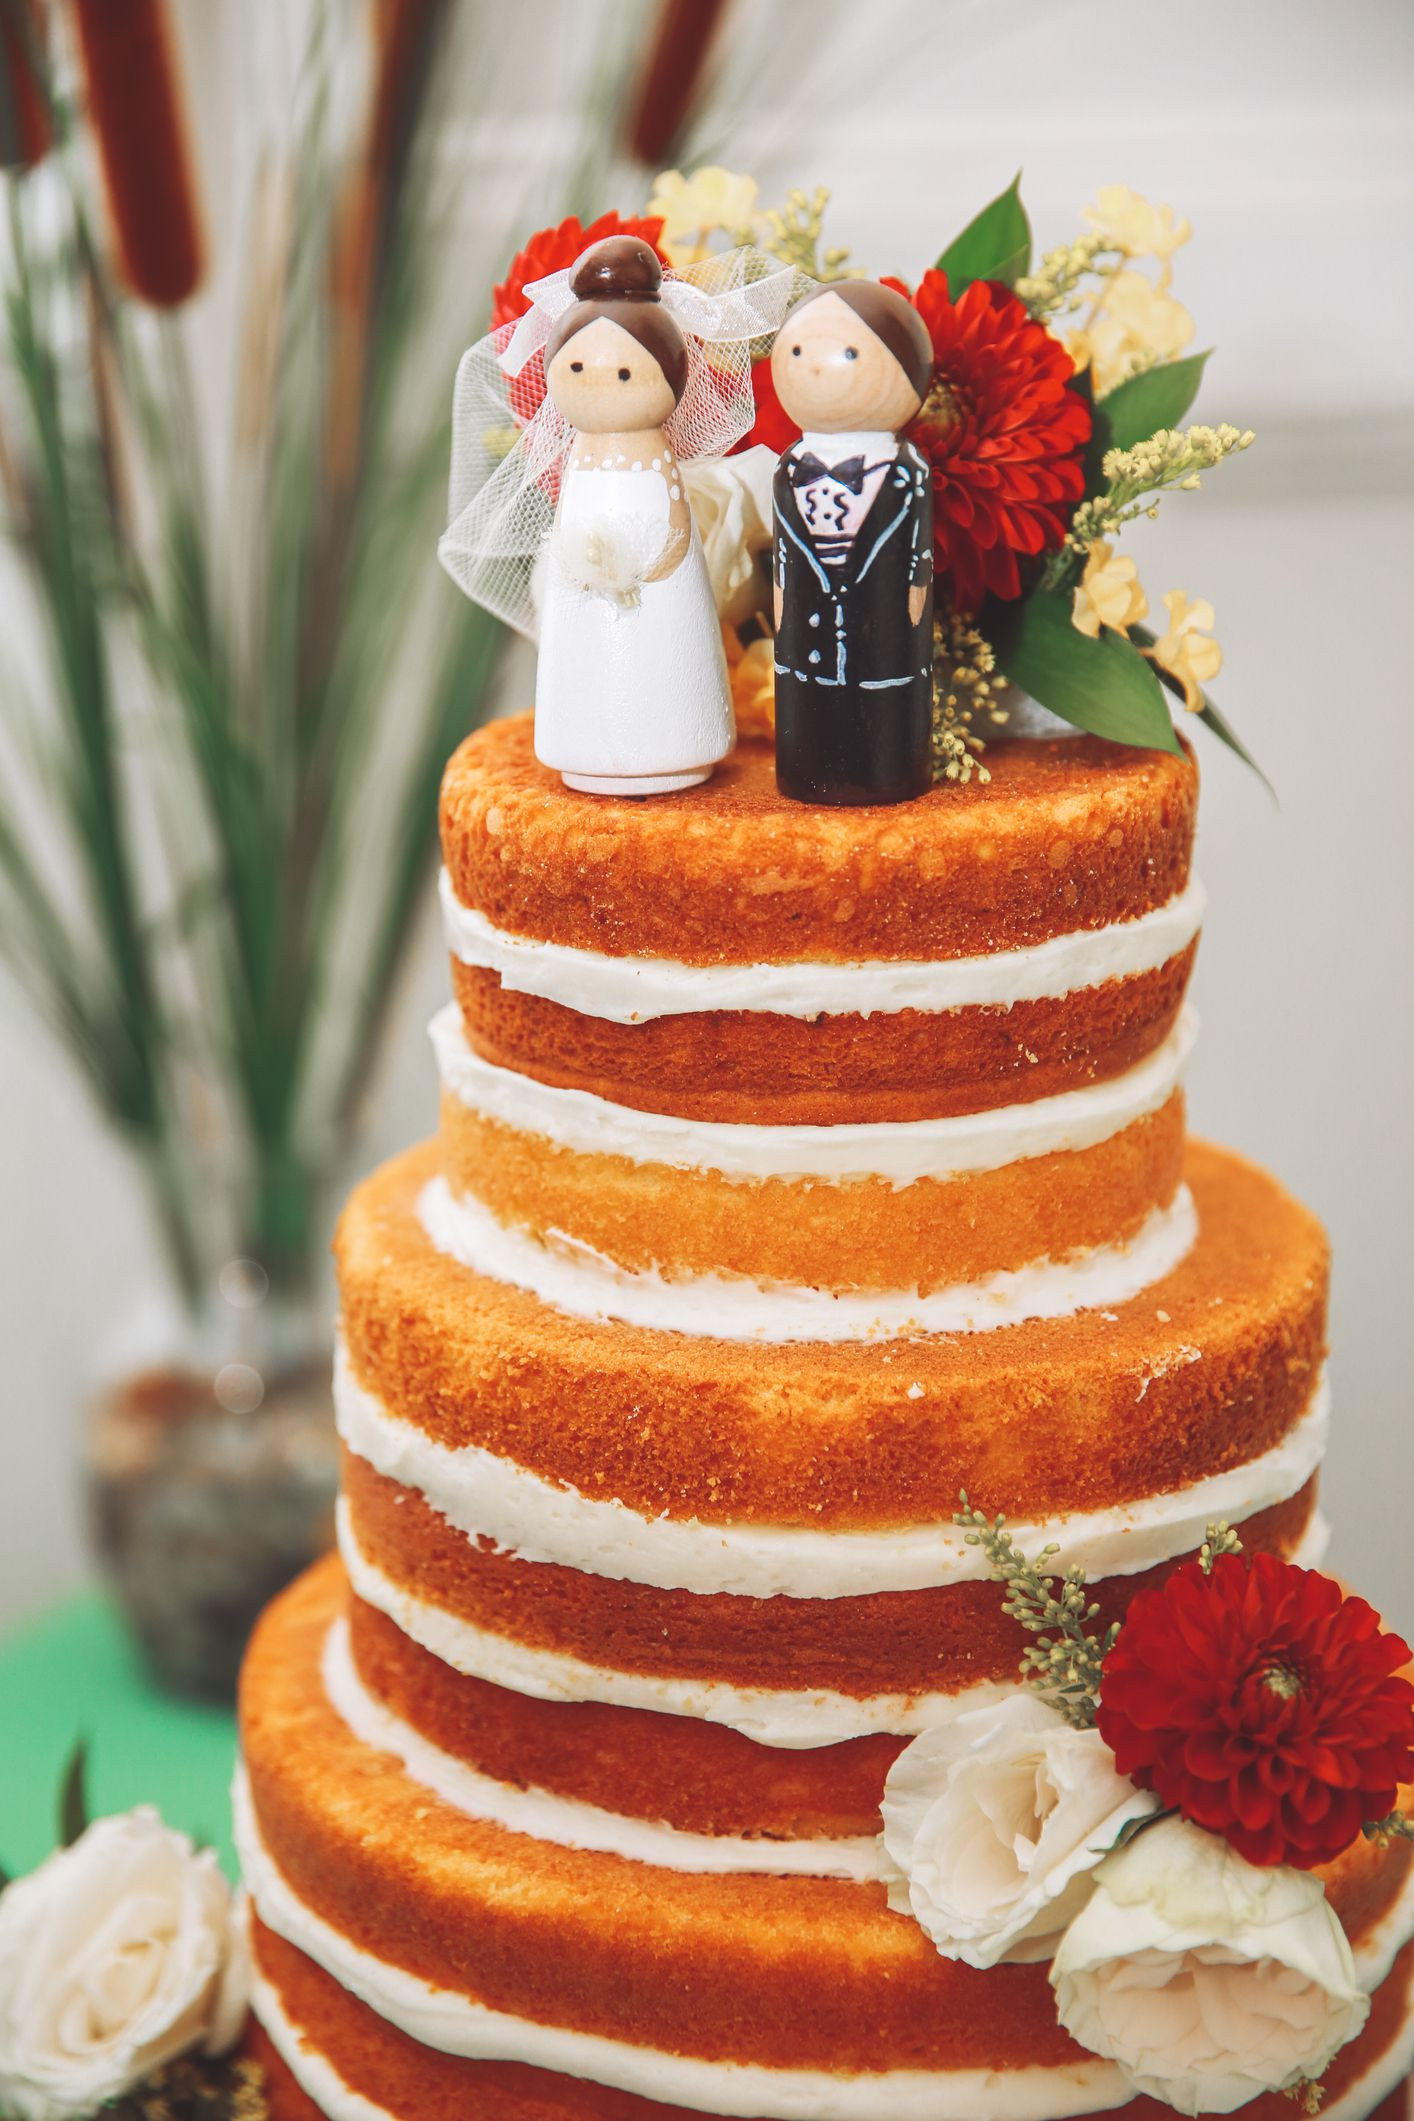 Homemade Wedding Cakes
 Inspiring Tales of DIY Wedding Cakes